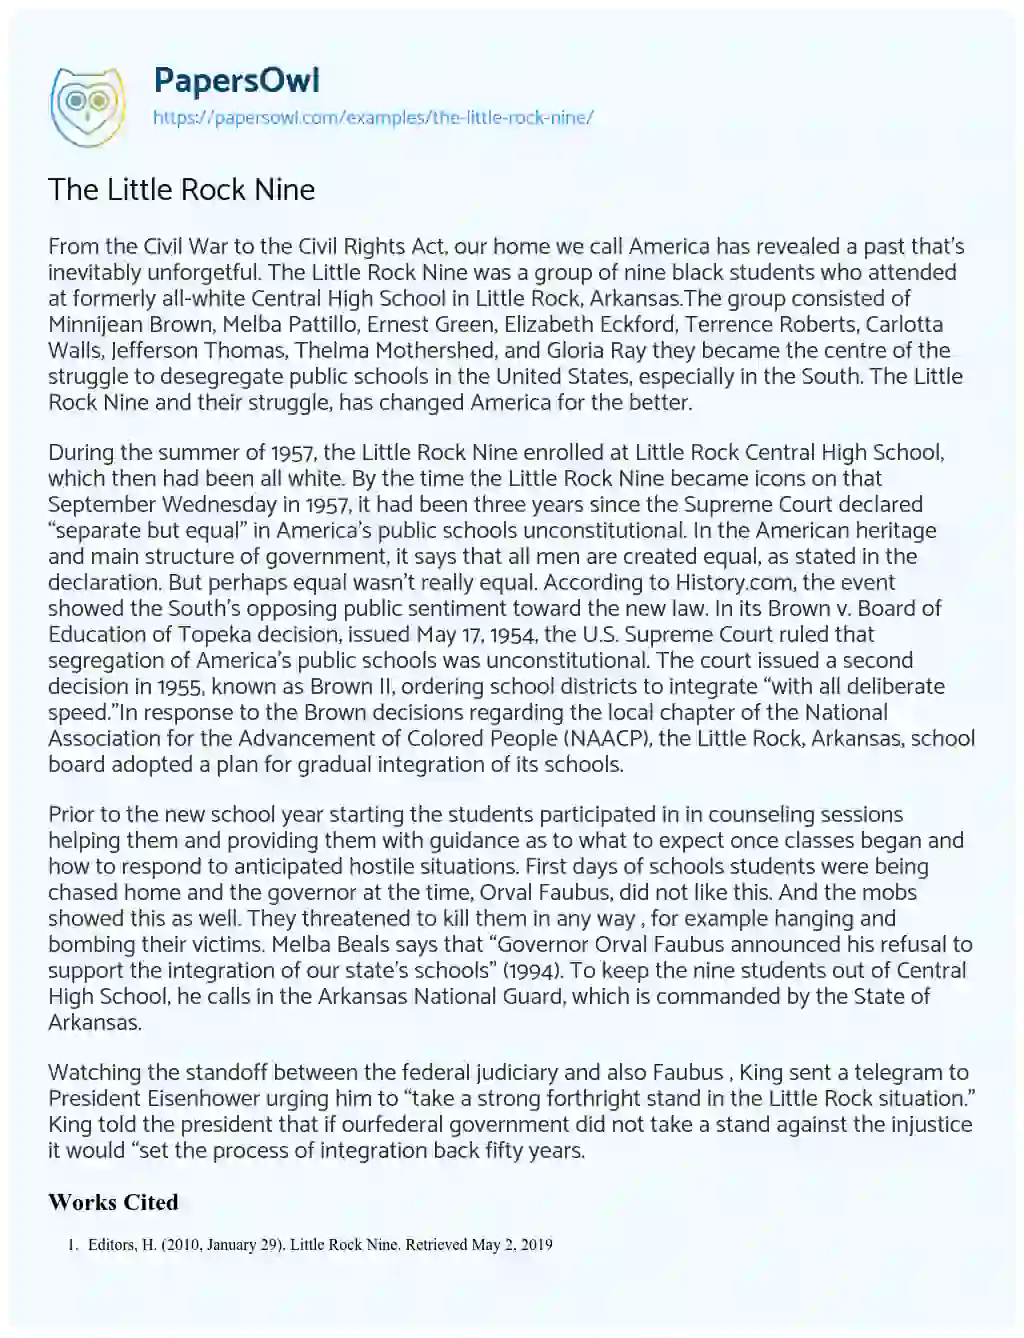 The Little Rock Nine essay